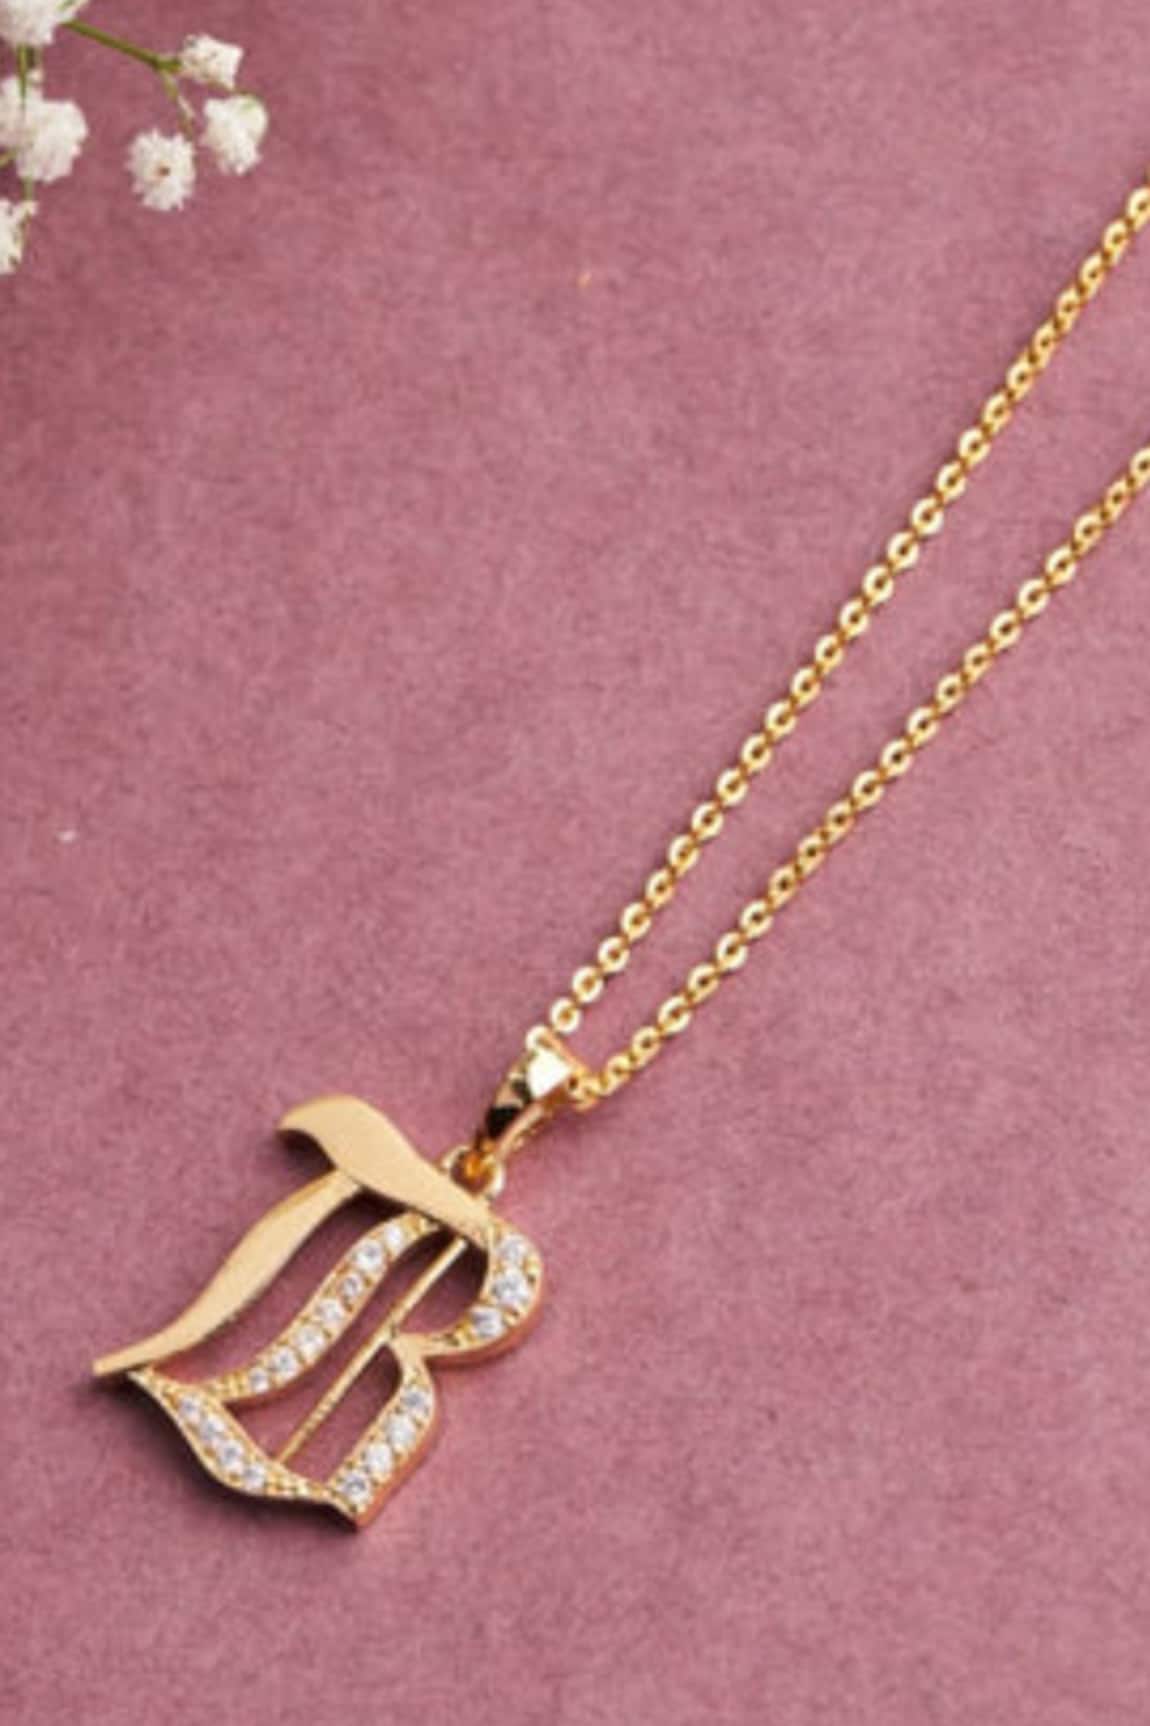 Mozaati B - Roman Initial Pendant Necklace